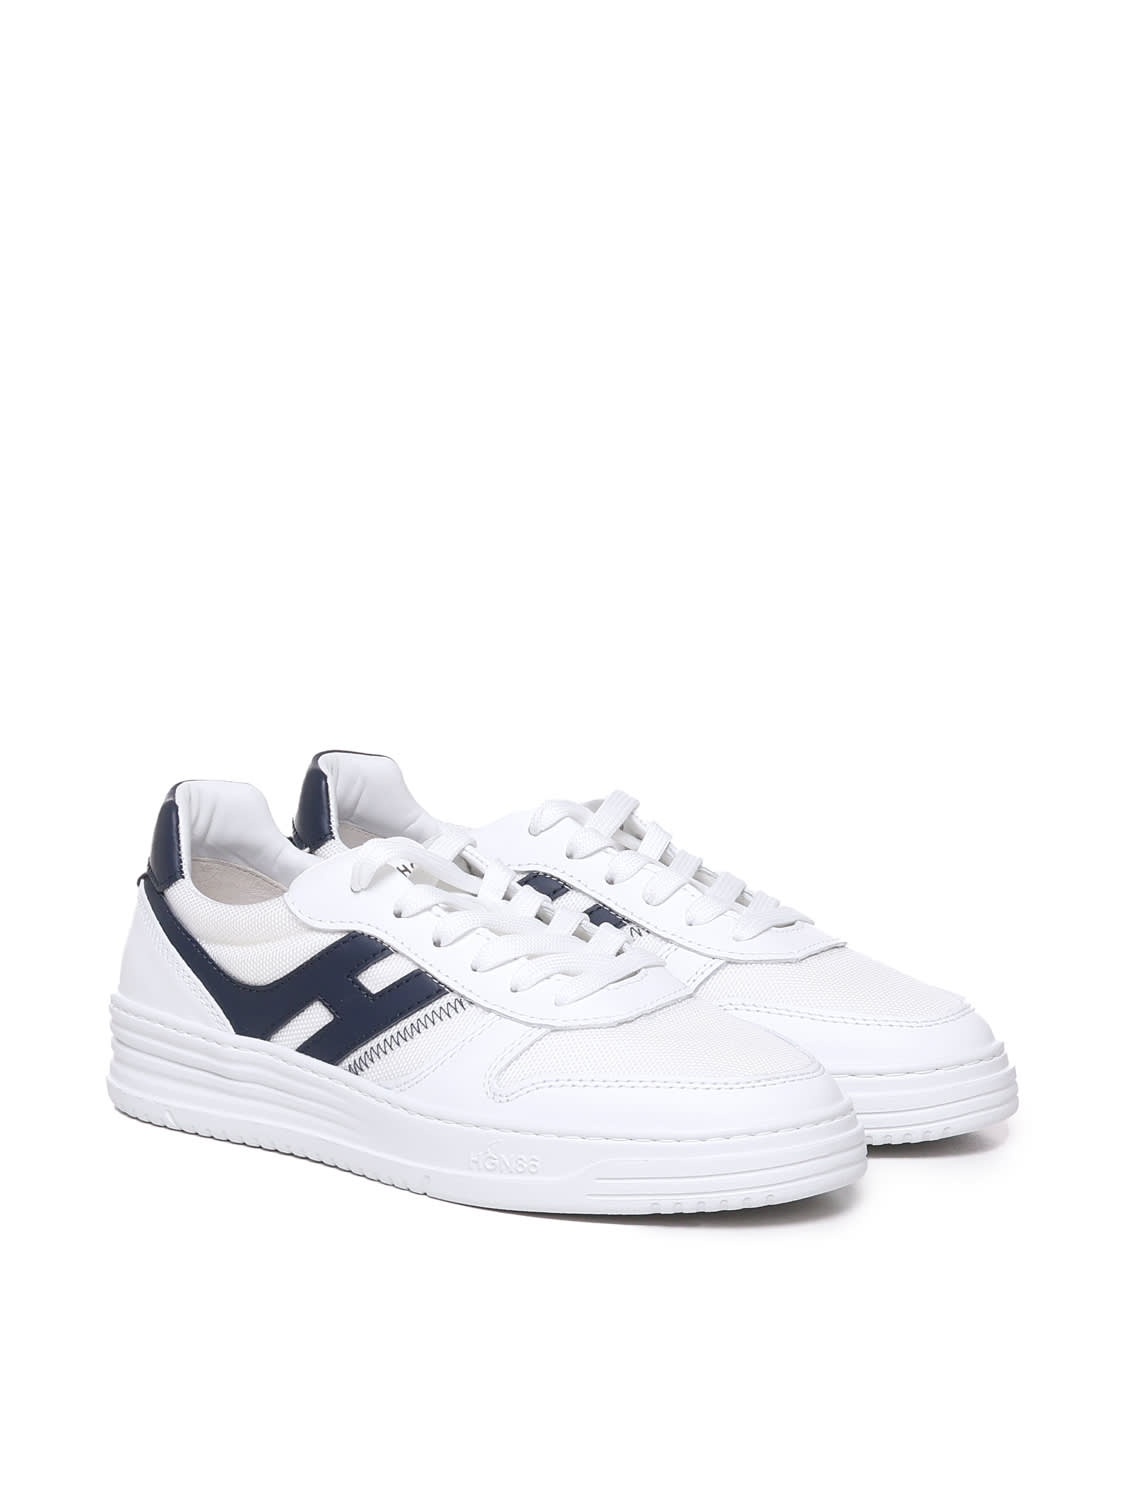 Shop Hogan H630 Sneakers In White, Blue